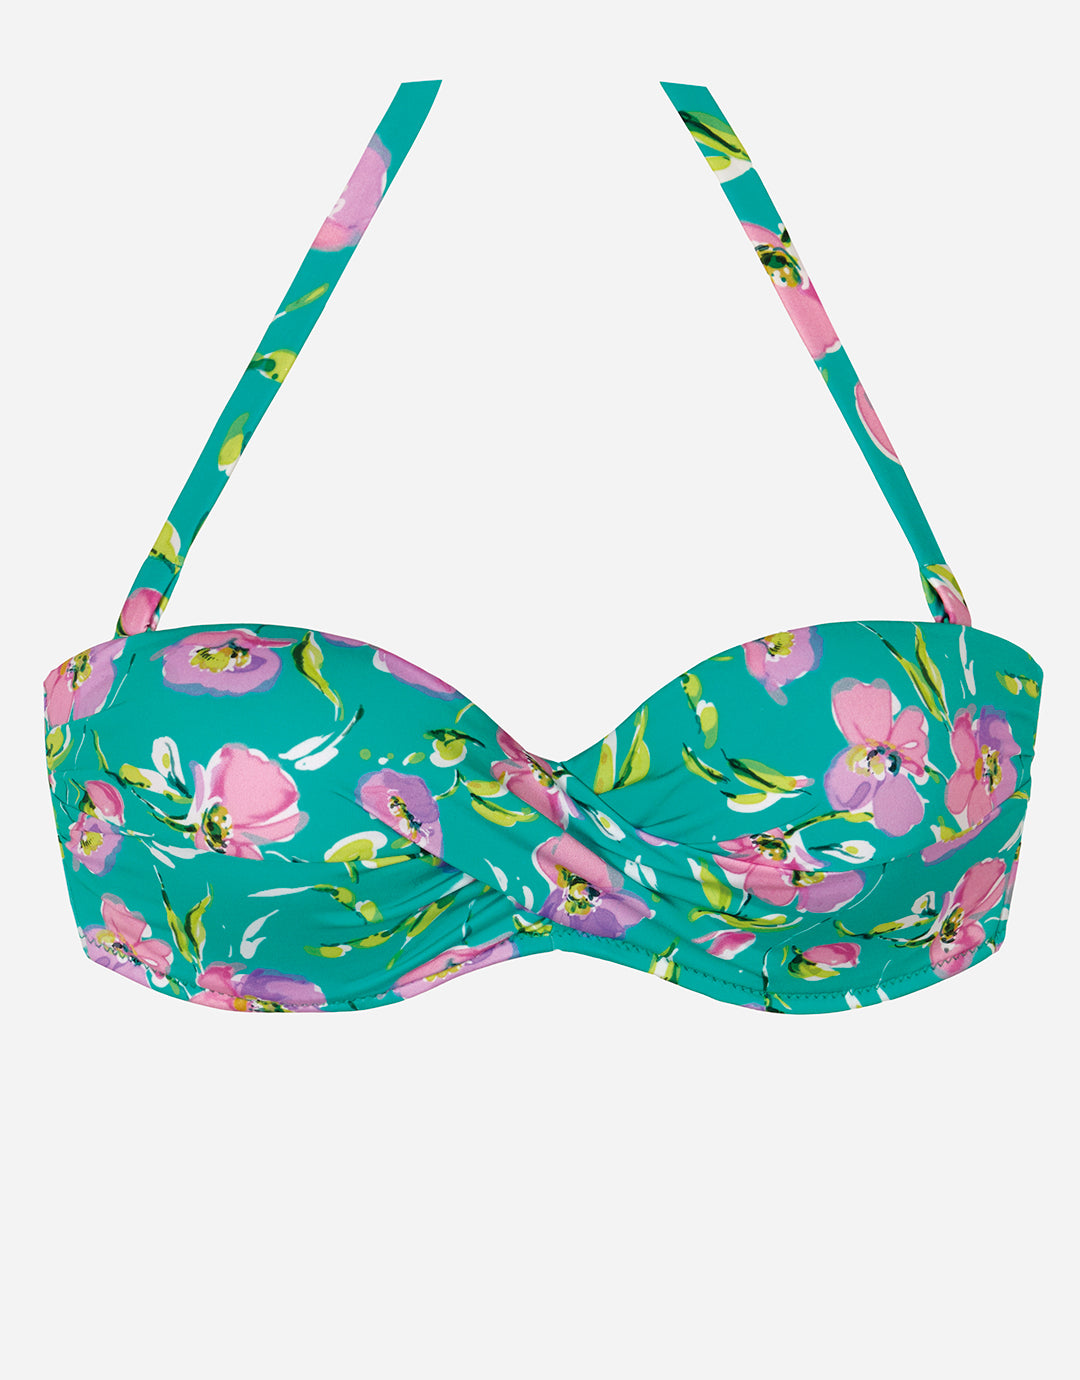 Blume Bandeau Bikini Top - Mint Floral - Simply Beach UK